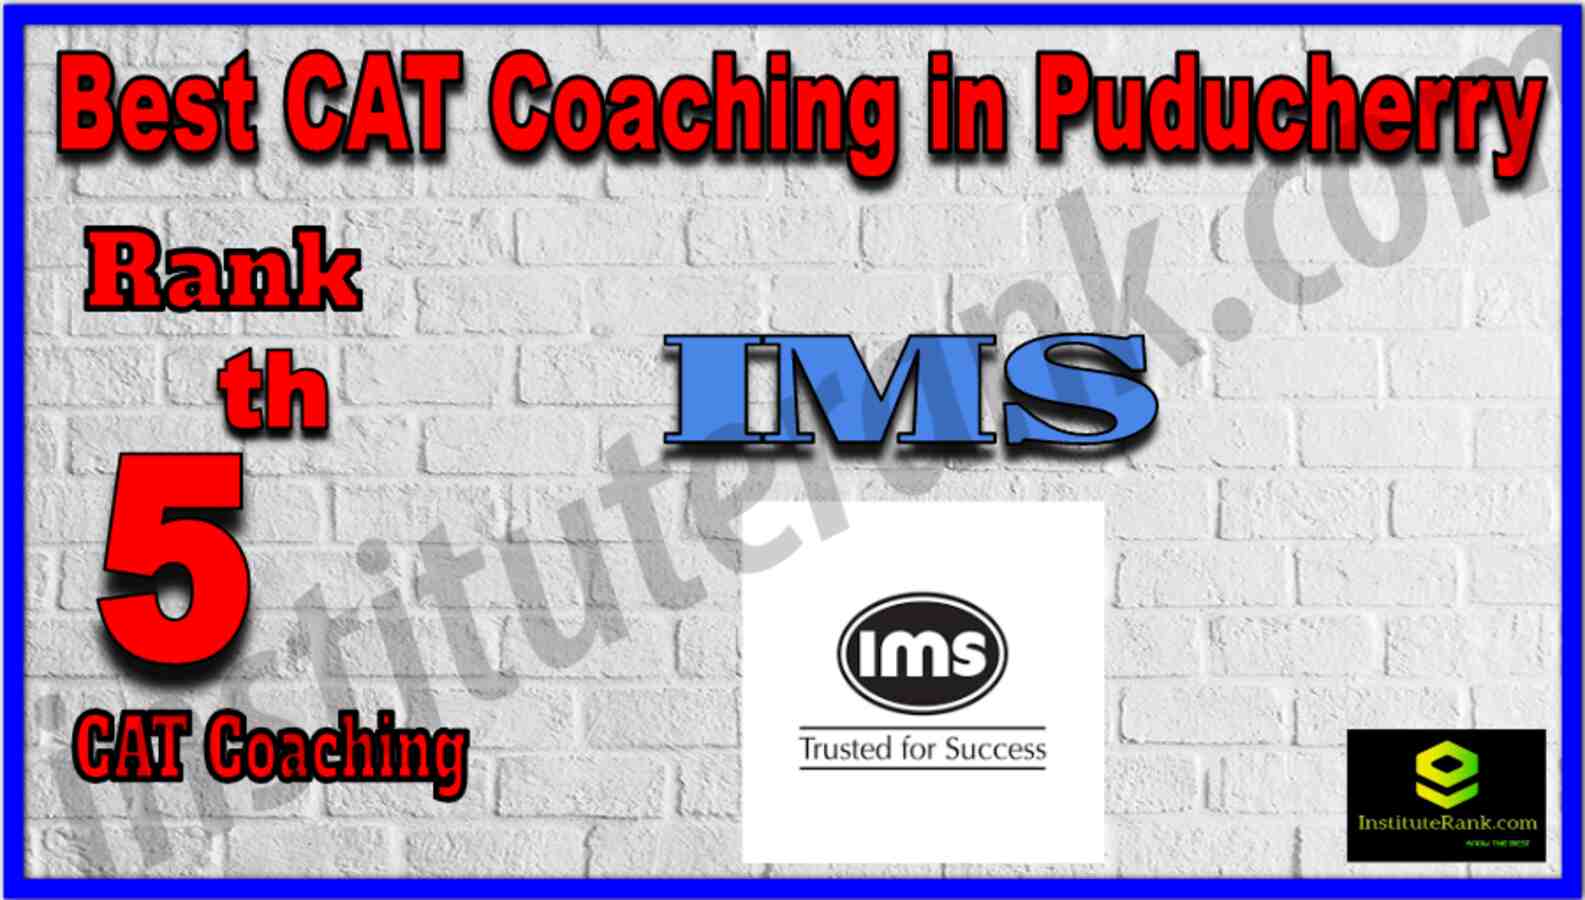 Rank 5 Best CAT Coaching in Puducherry